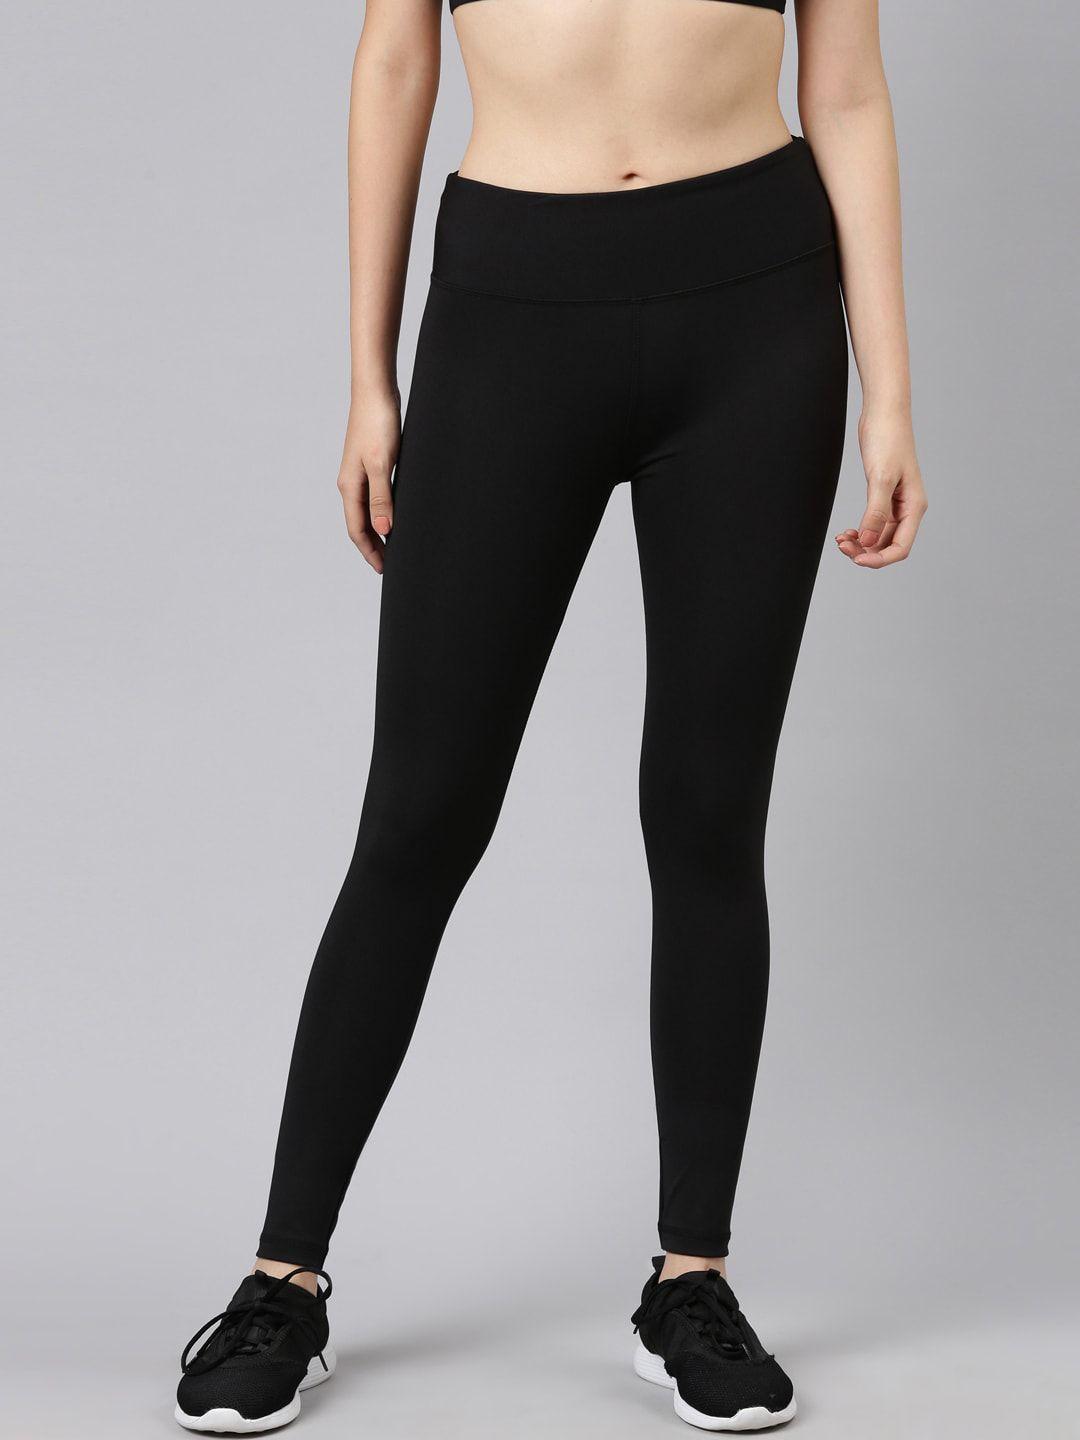 kryptic women black solid slim fit dry fit tights